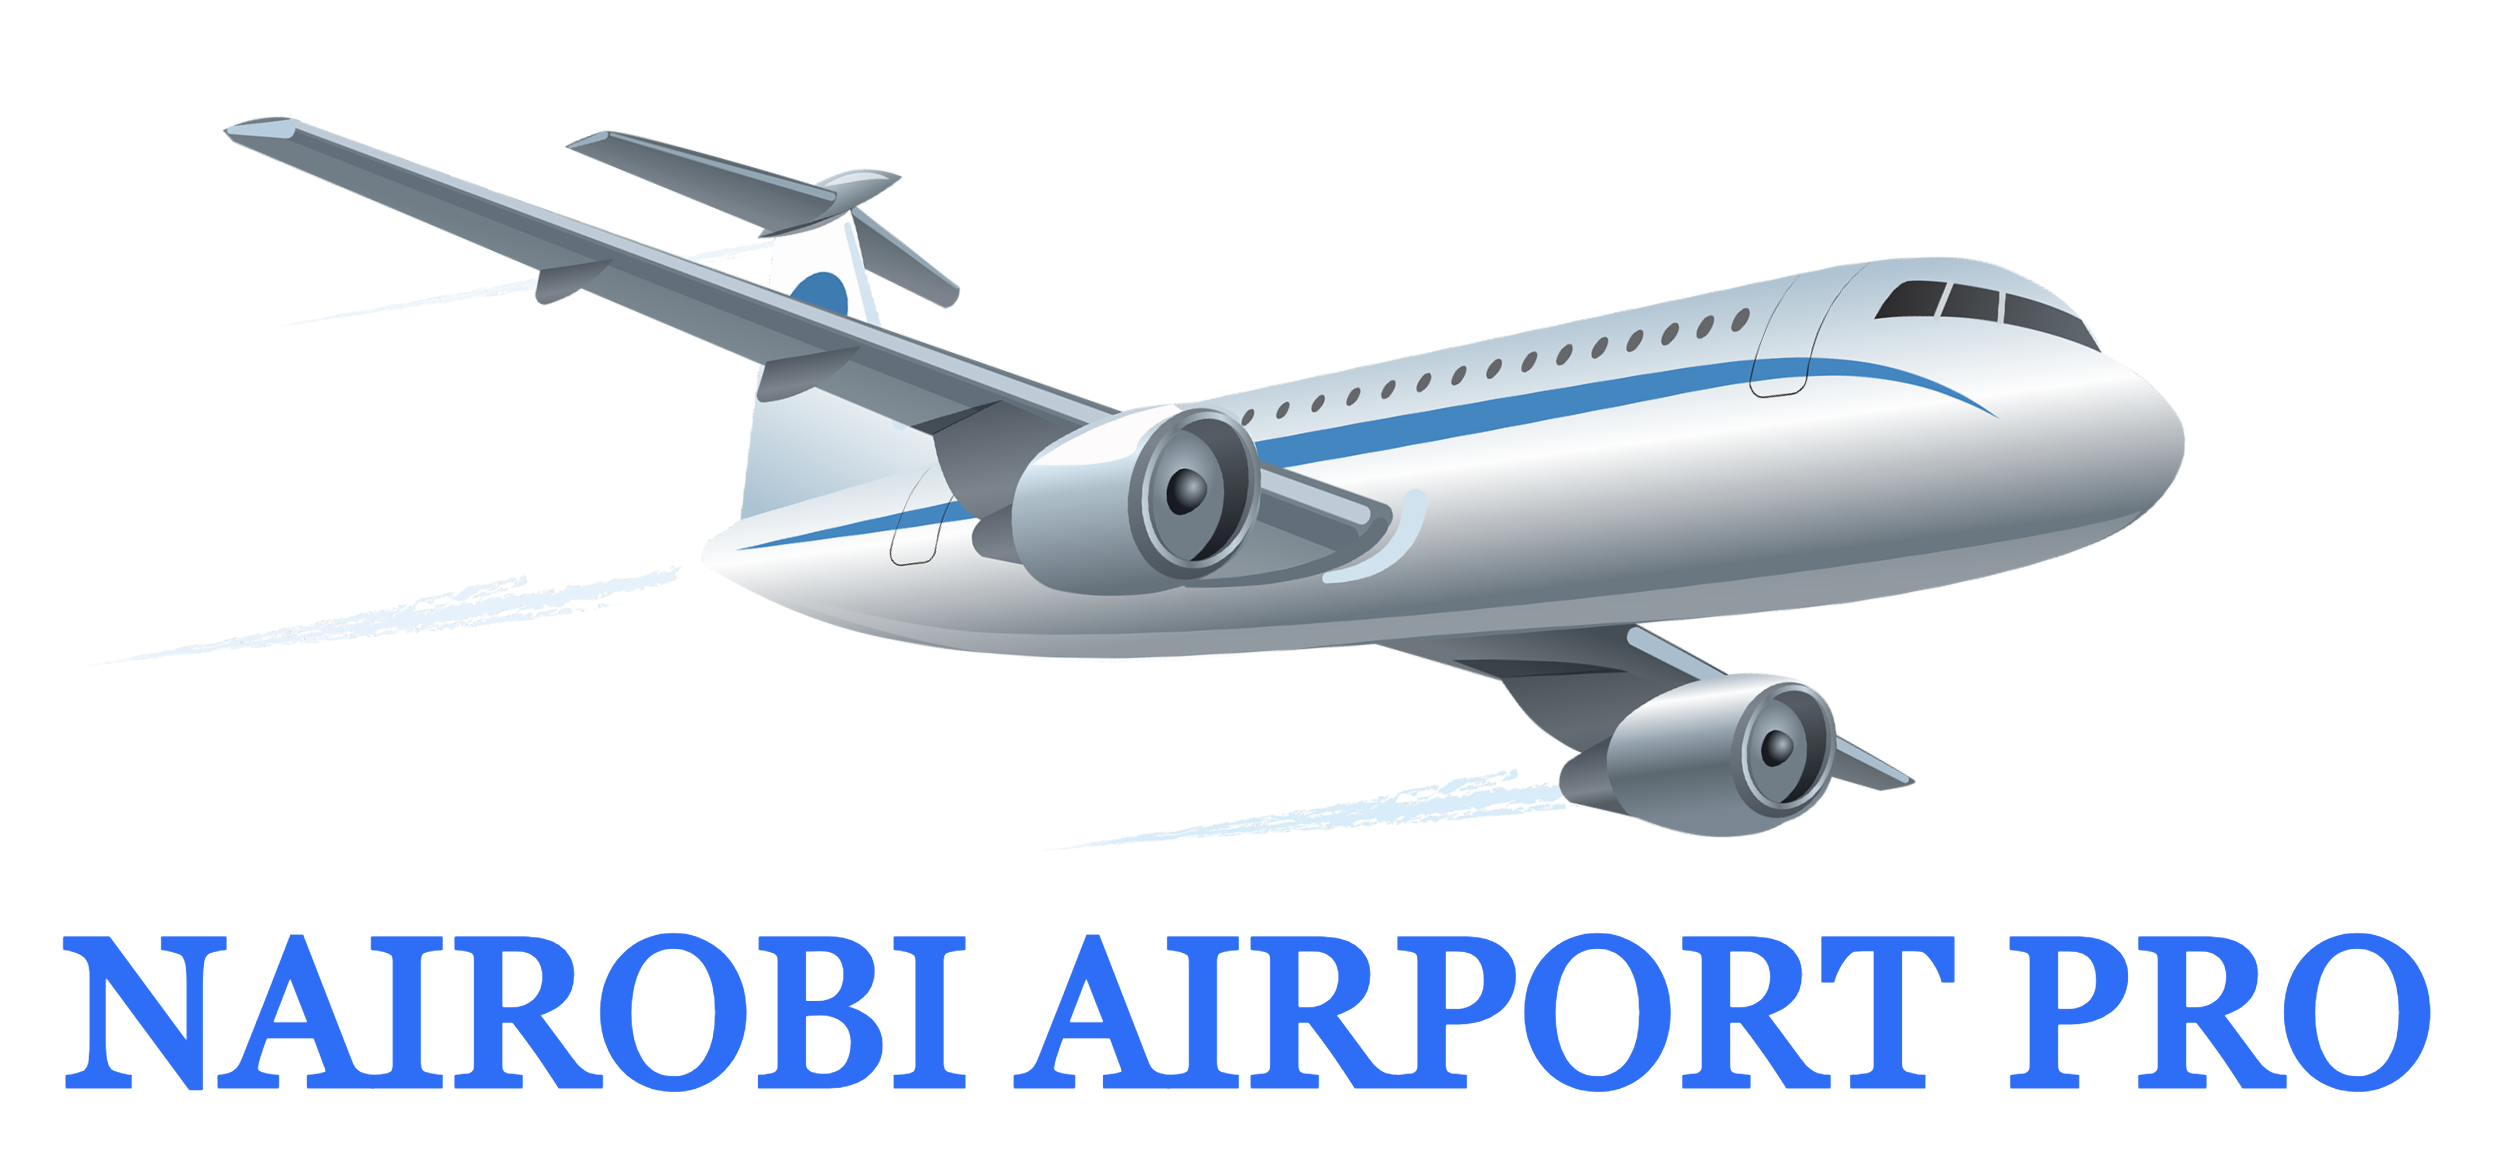 Nairobi Airport Pro | Shop - Nairobi Airport Pro